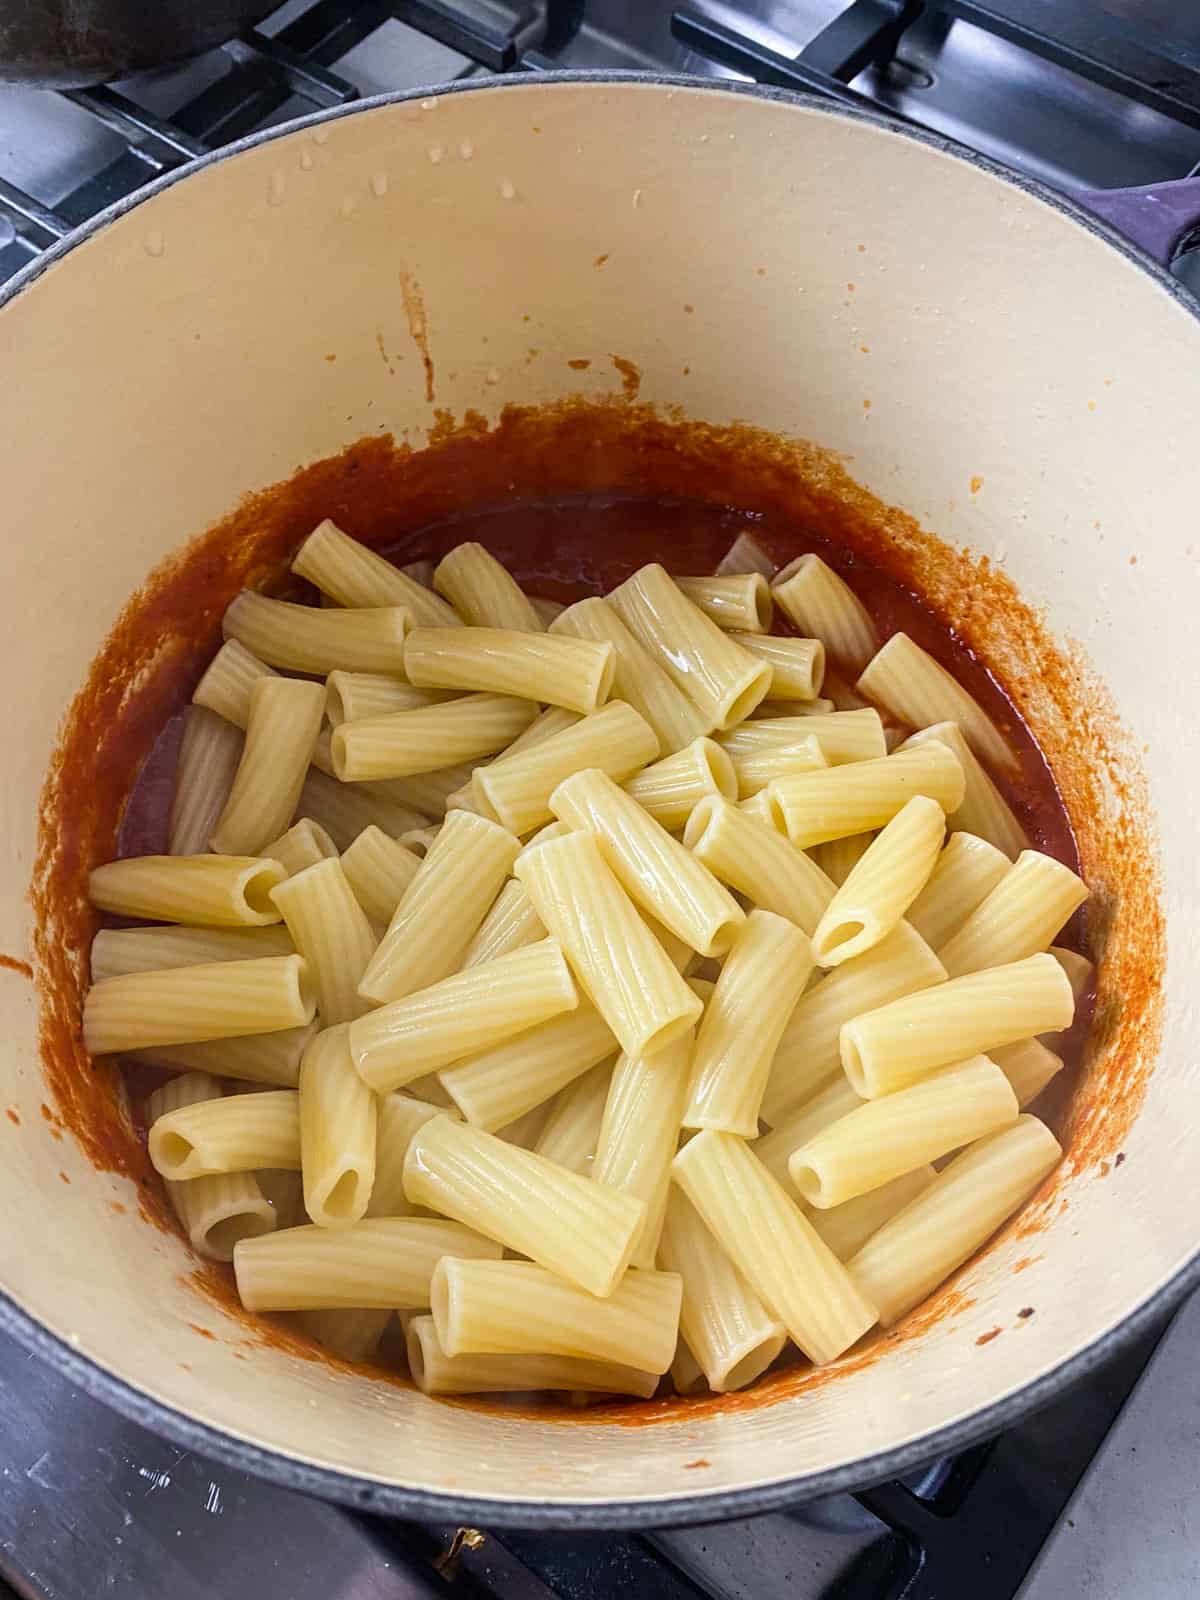 Add the cooked rigatoni pasta to the marinara sauce.